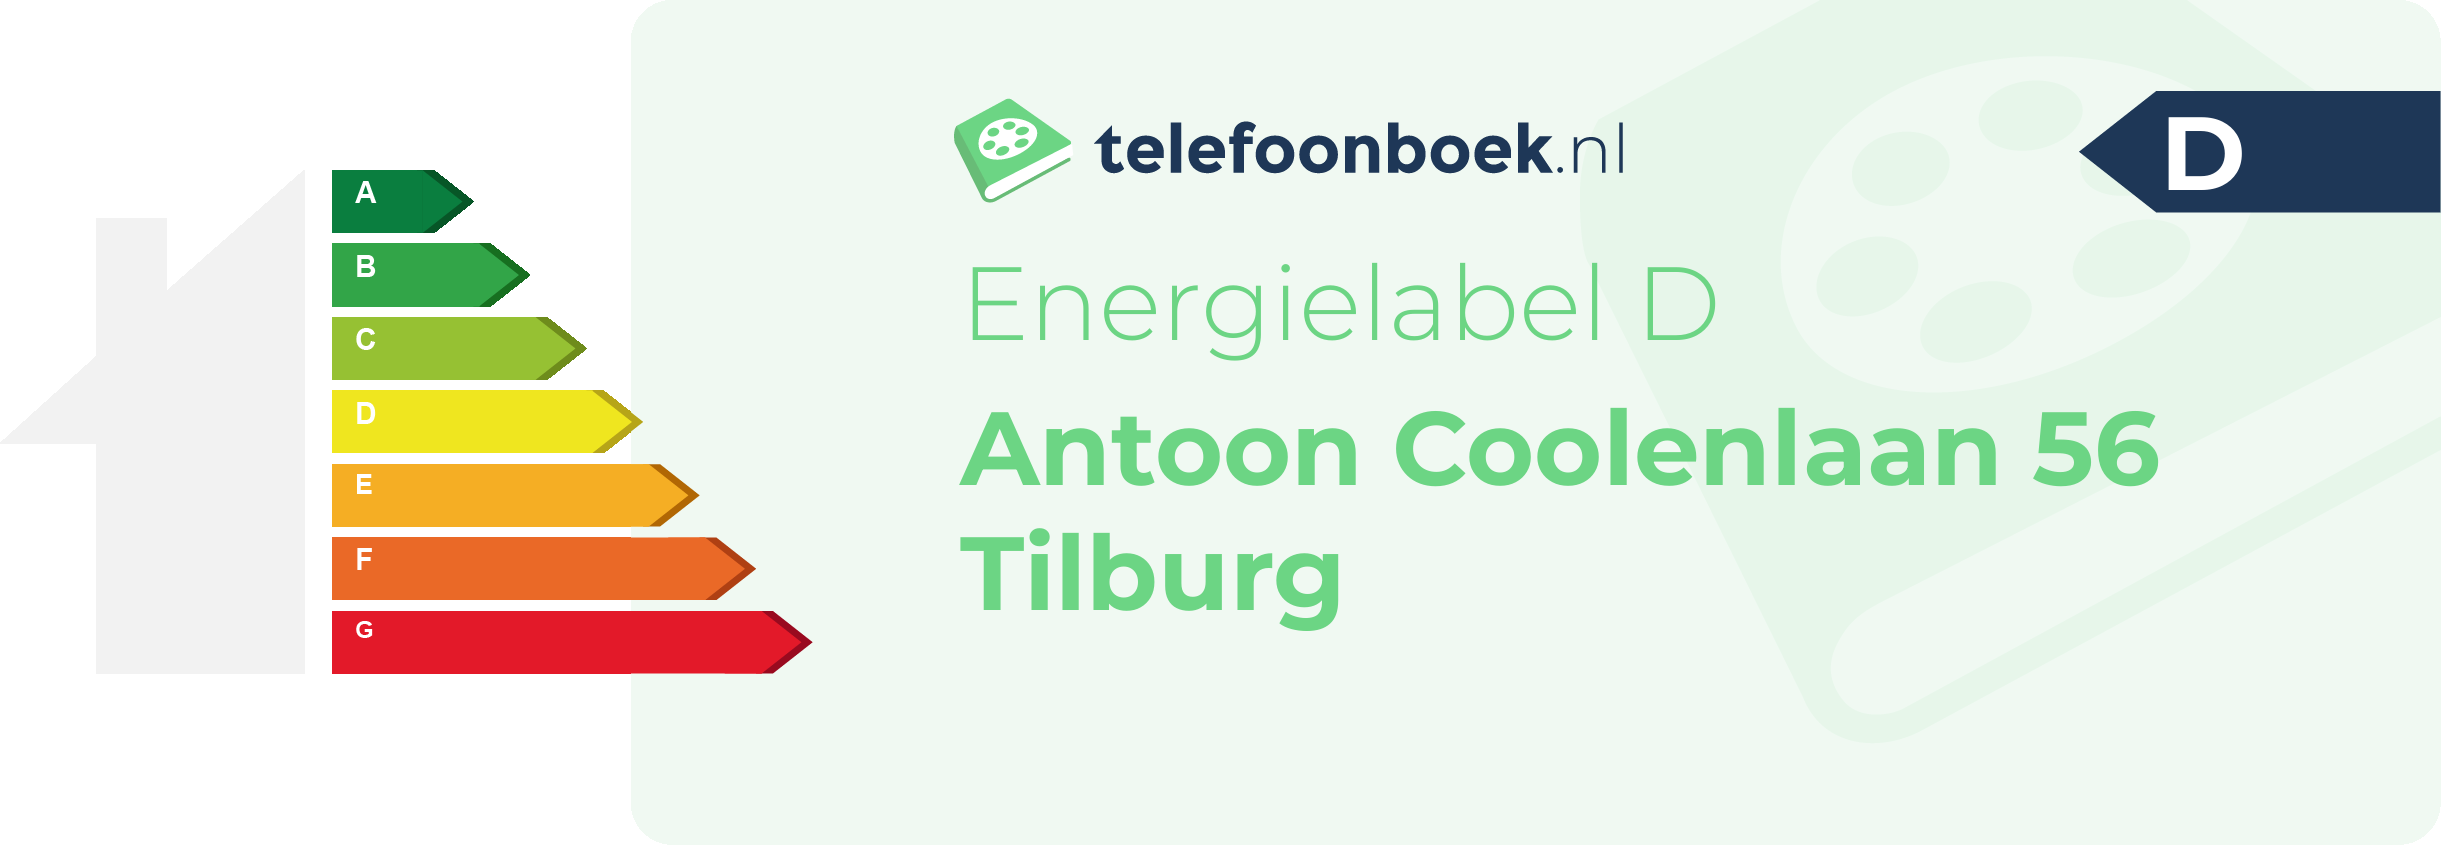 Energielabel Antoon Coolenlaan 56 Tilburg